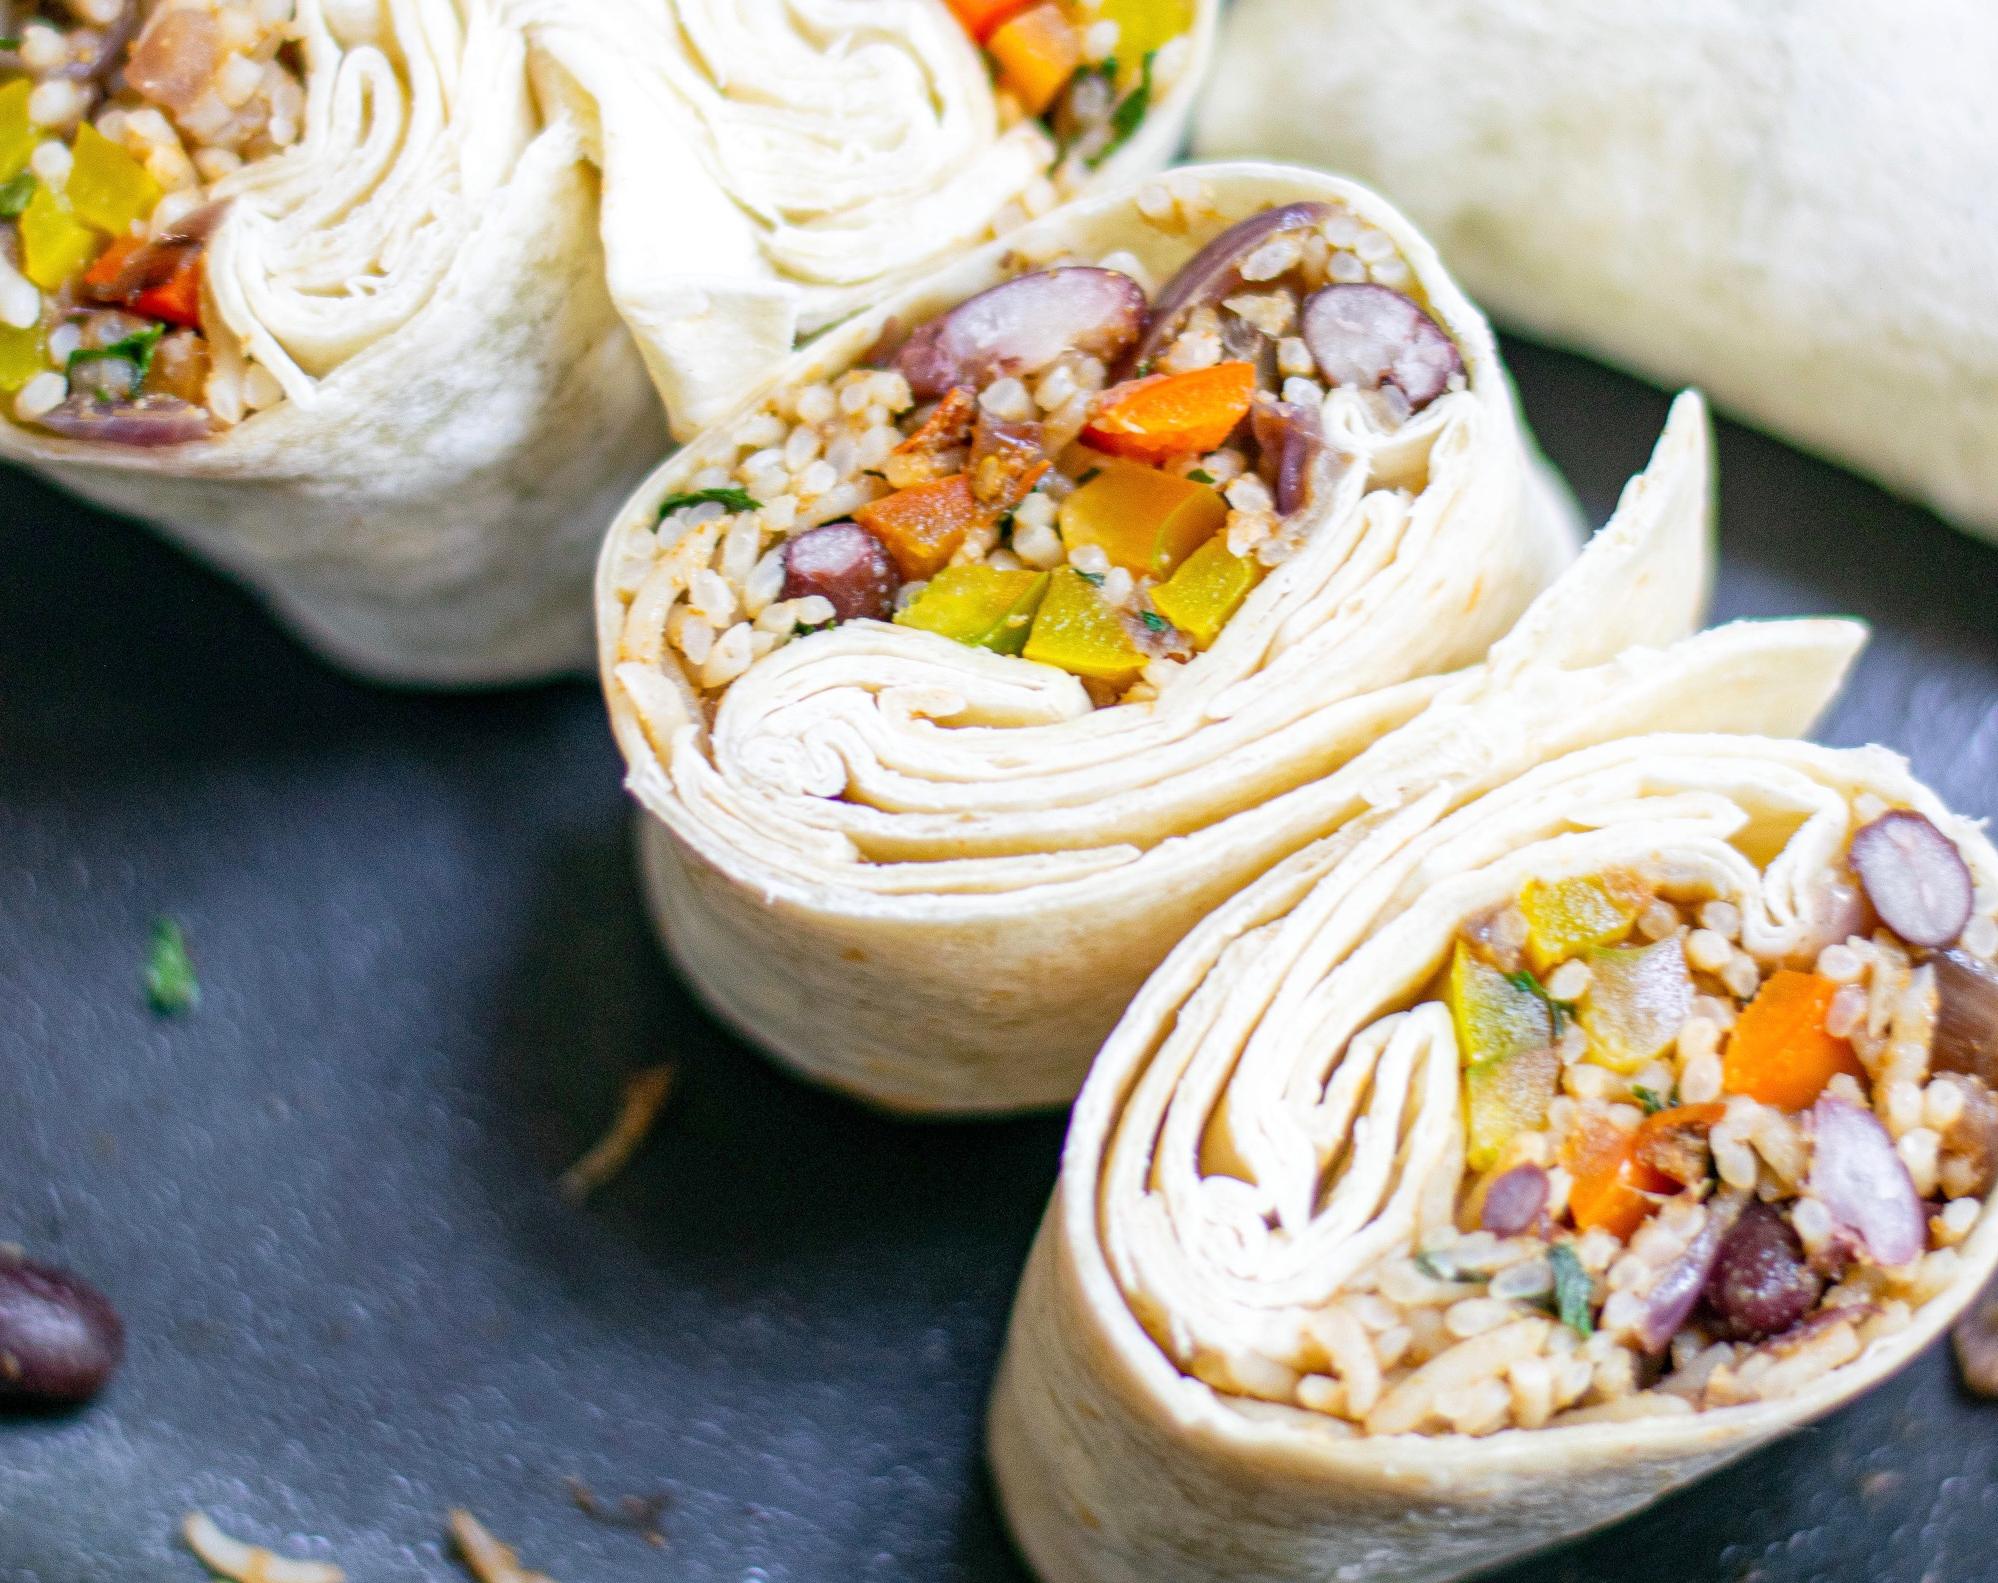  Tasty vegan burritos are the perfect gluten-free dish! 🌯